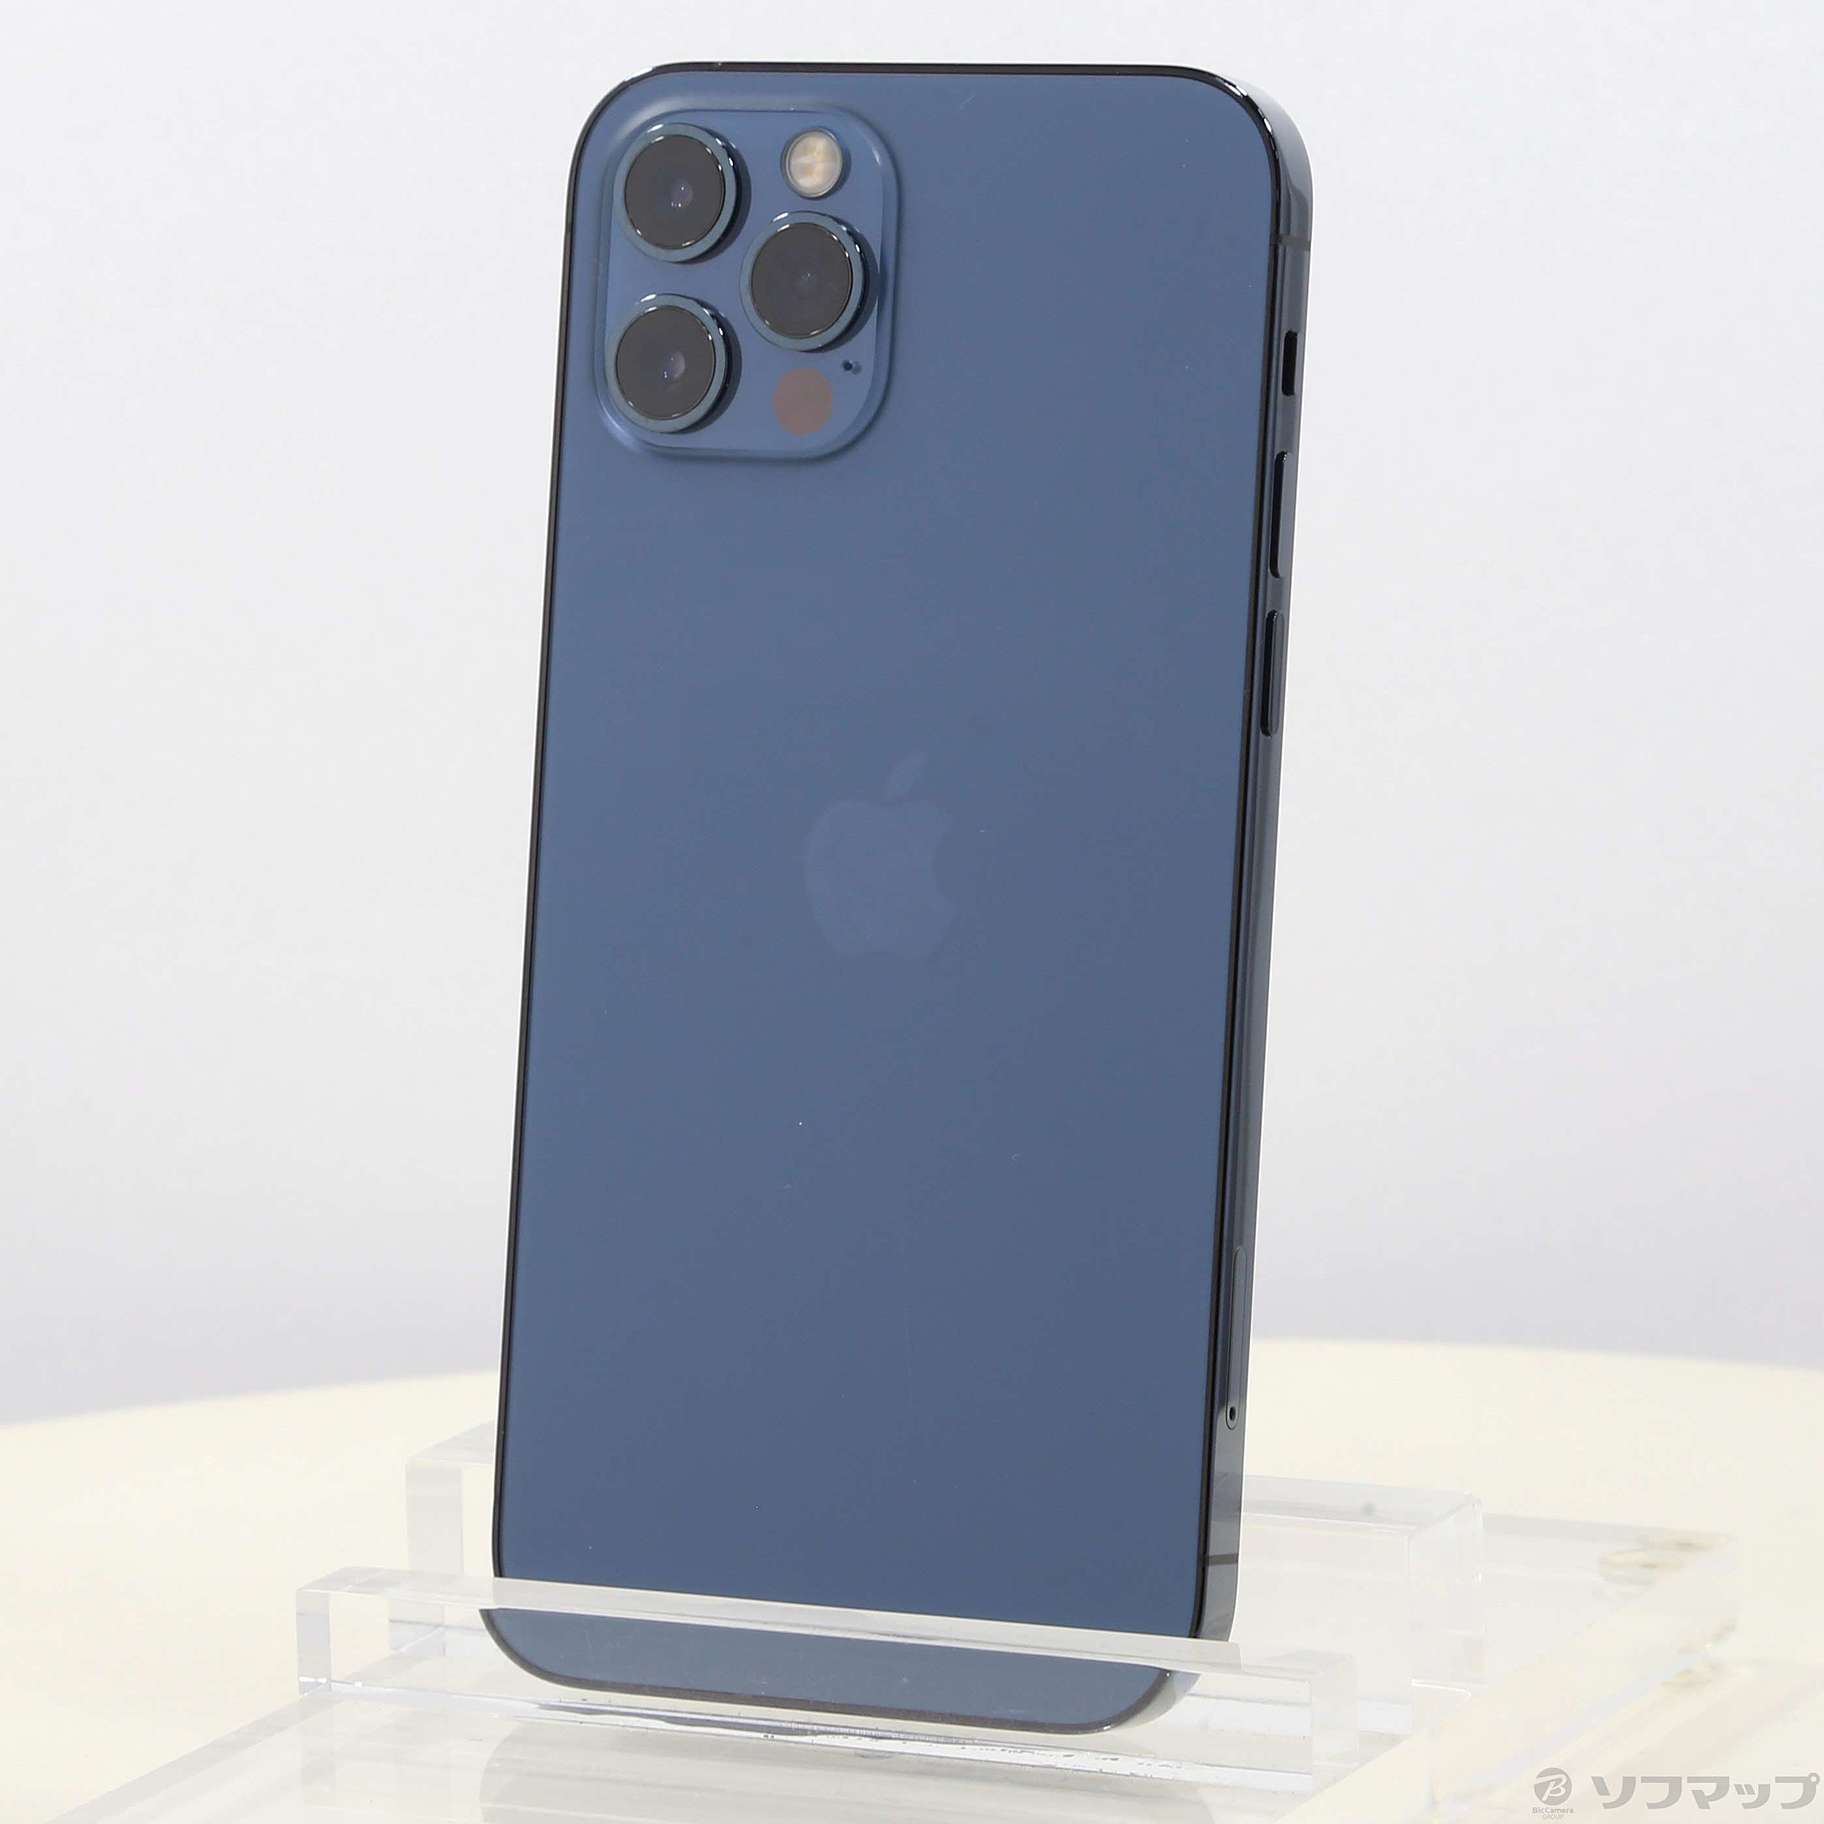 iPhone 12 Pro 512 GB SIMフリー パシフィックブルー